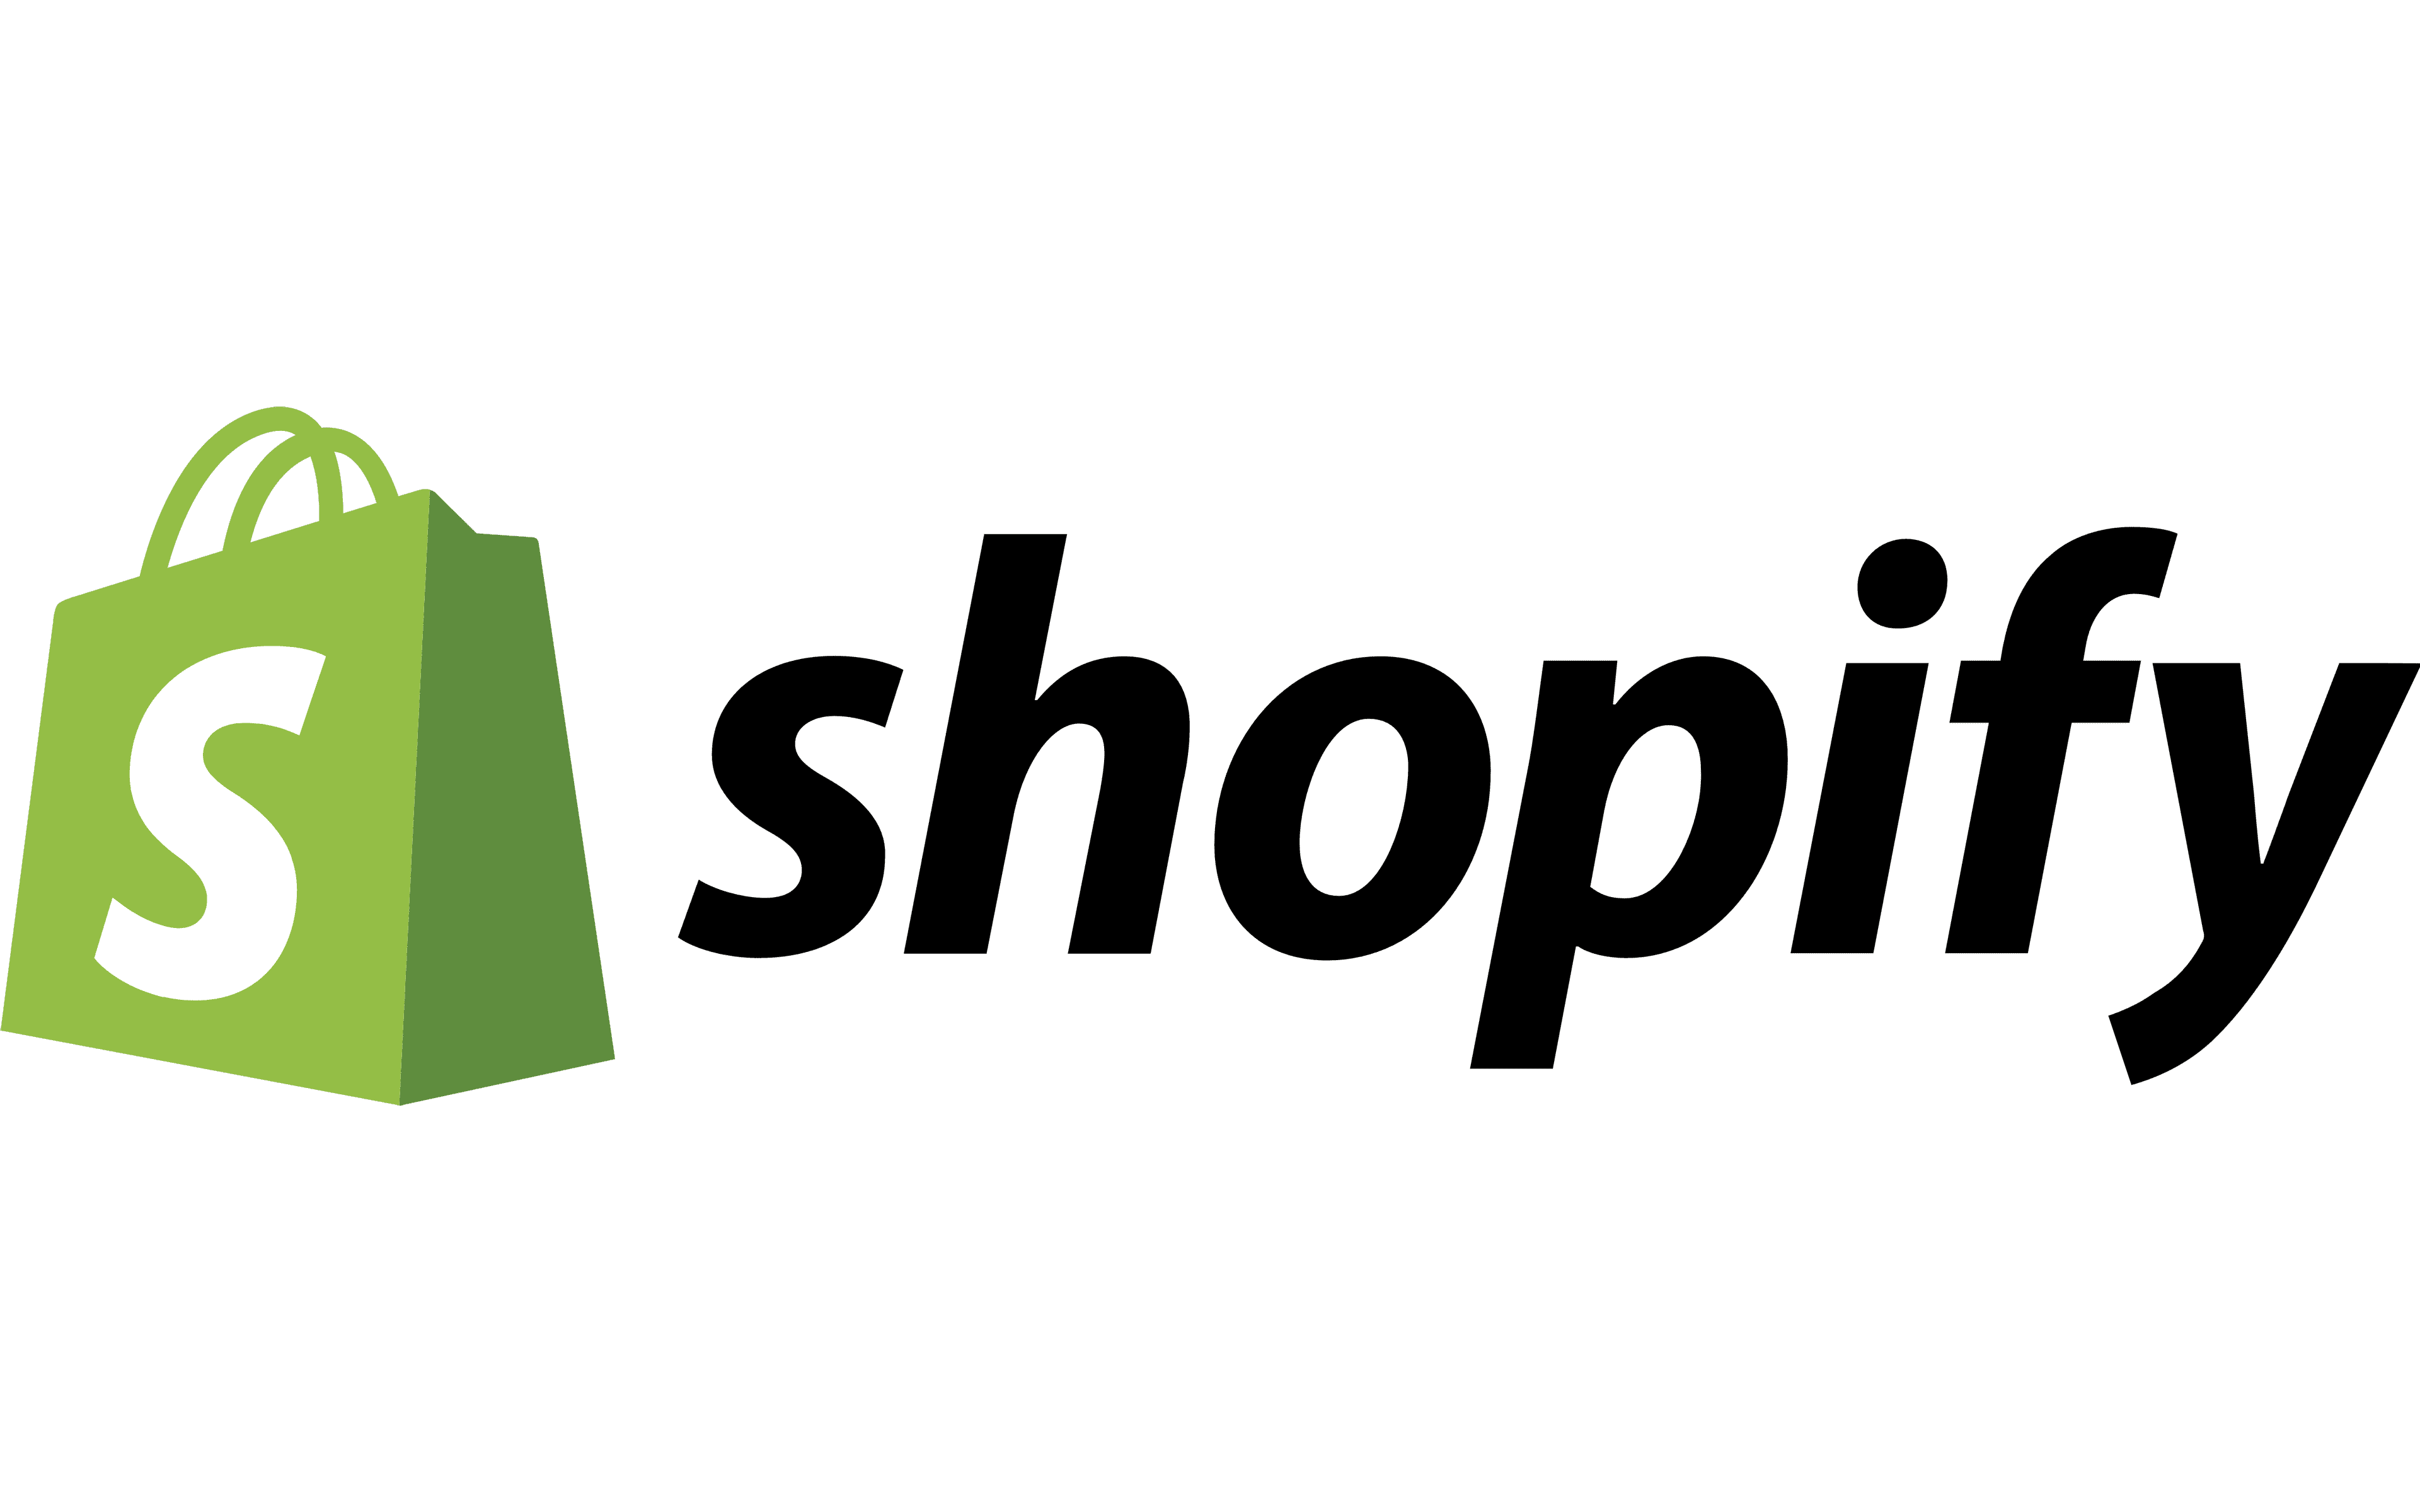 Shopify-partner